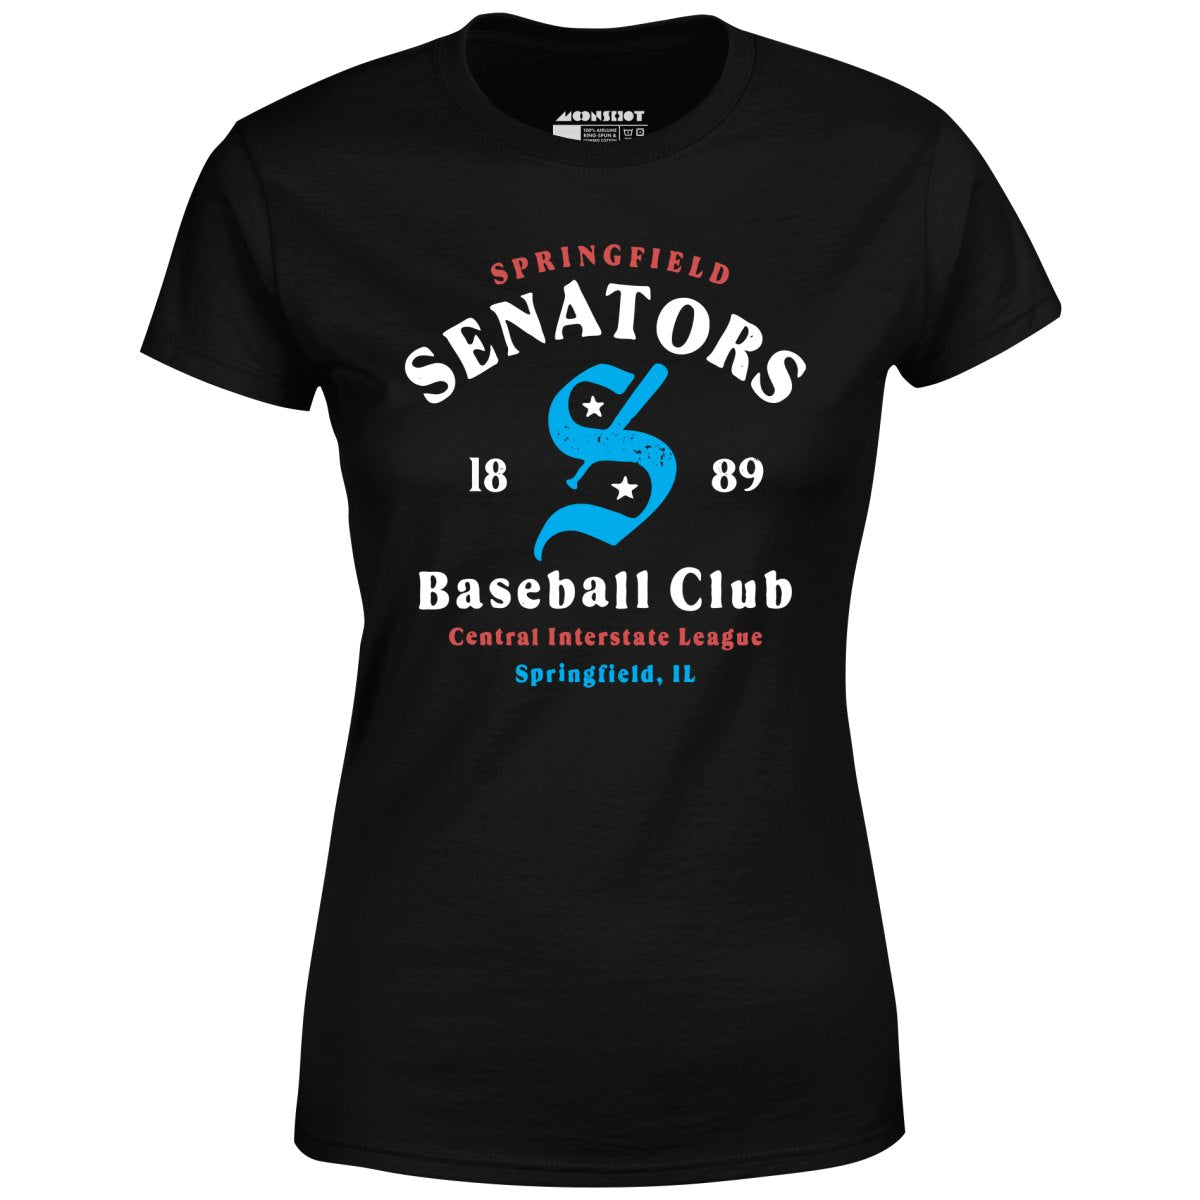 Springfield Senators - Illinois - Vintage Defunct Baseball Teams - Women's T-Shirt